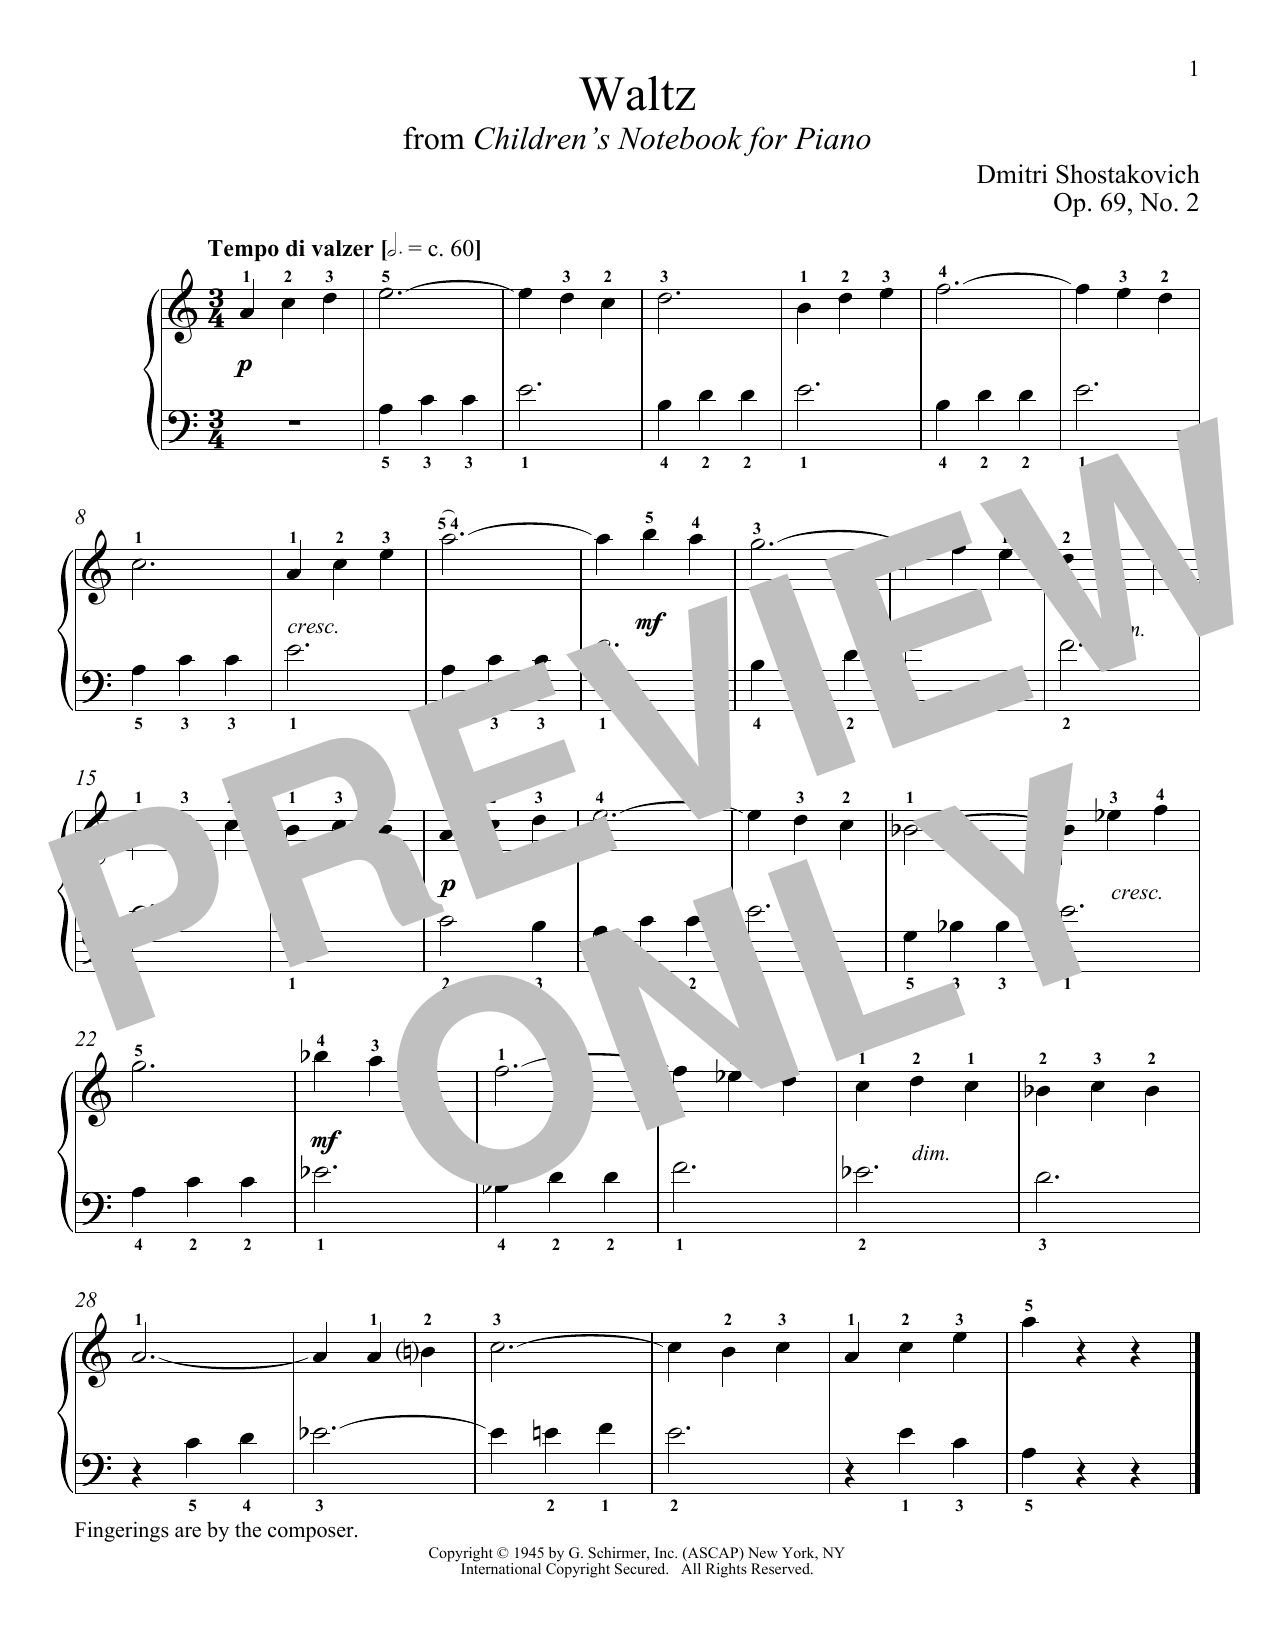 Dmitri Shostakovich Waltz, Op. 69, No. 2 Sheet Music Notes & Chords for Piano - Download or Print PDF